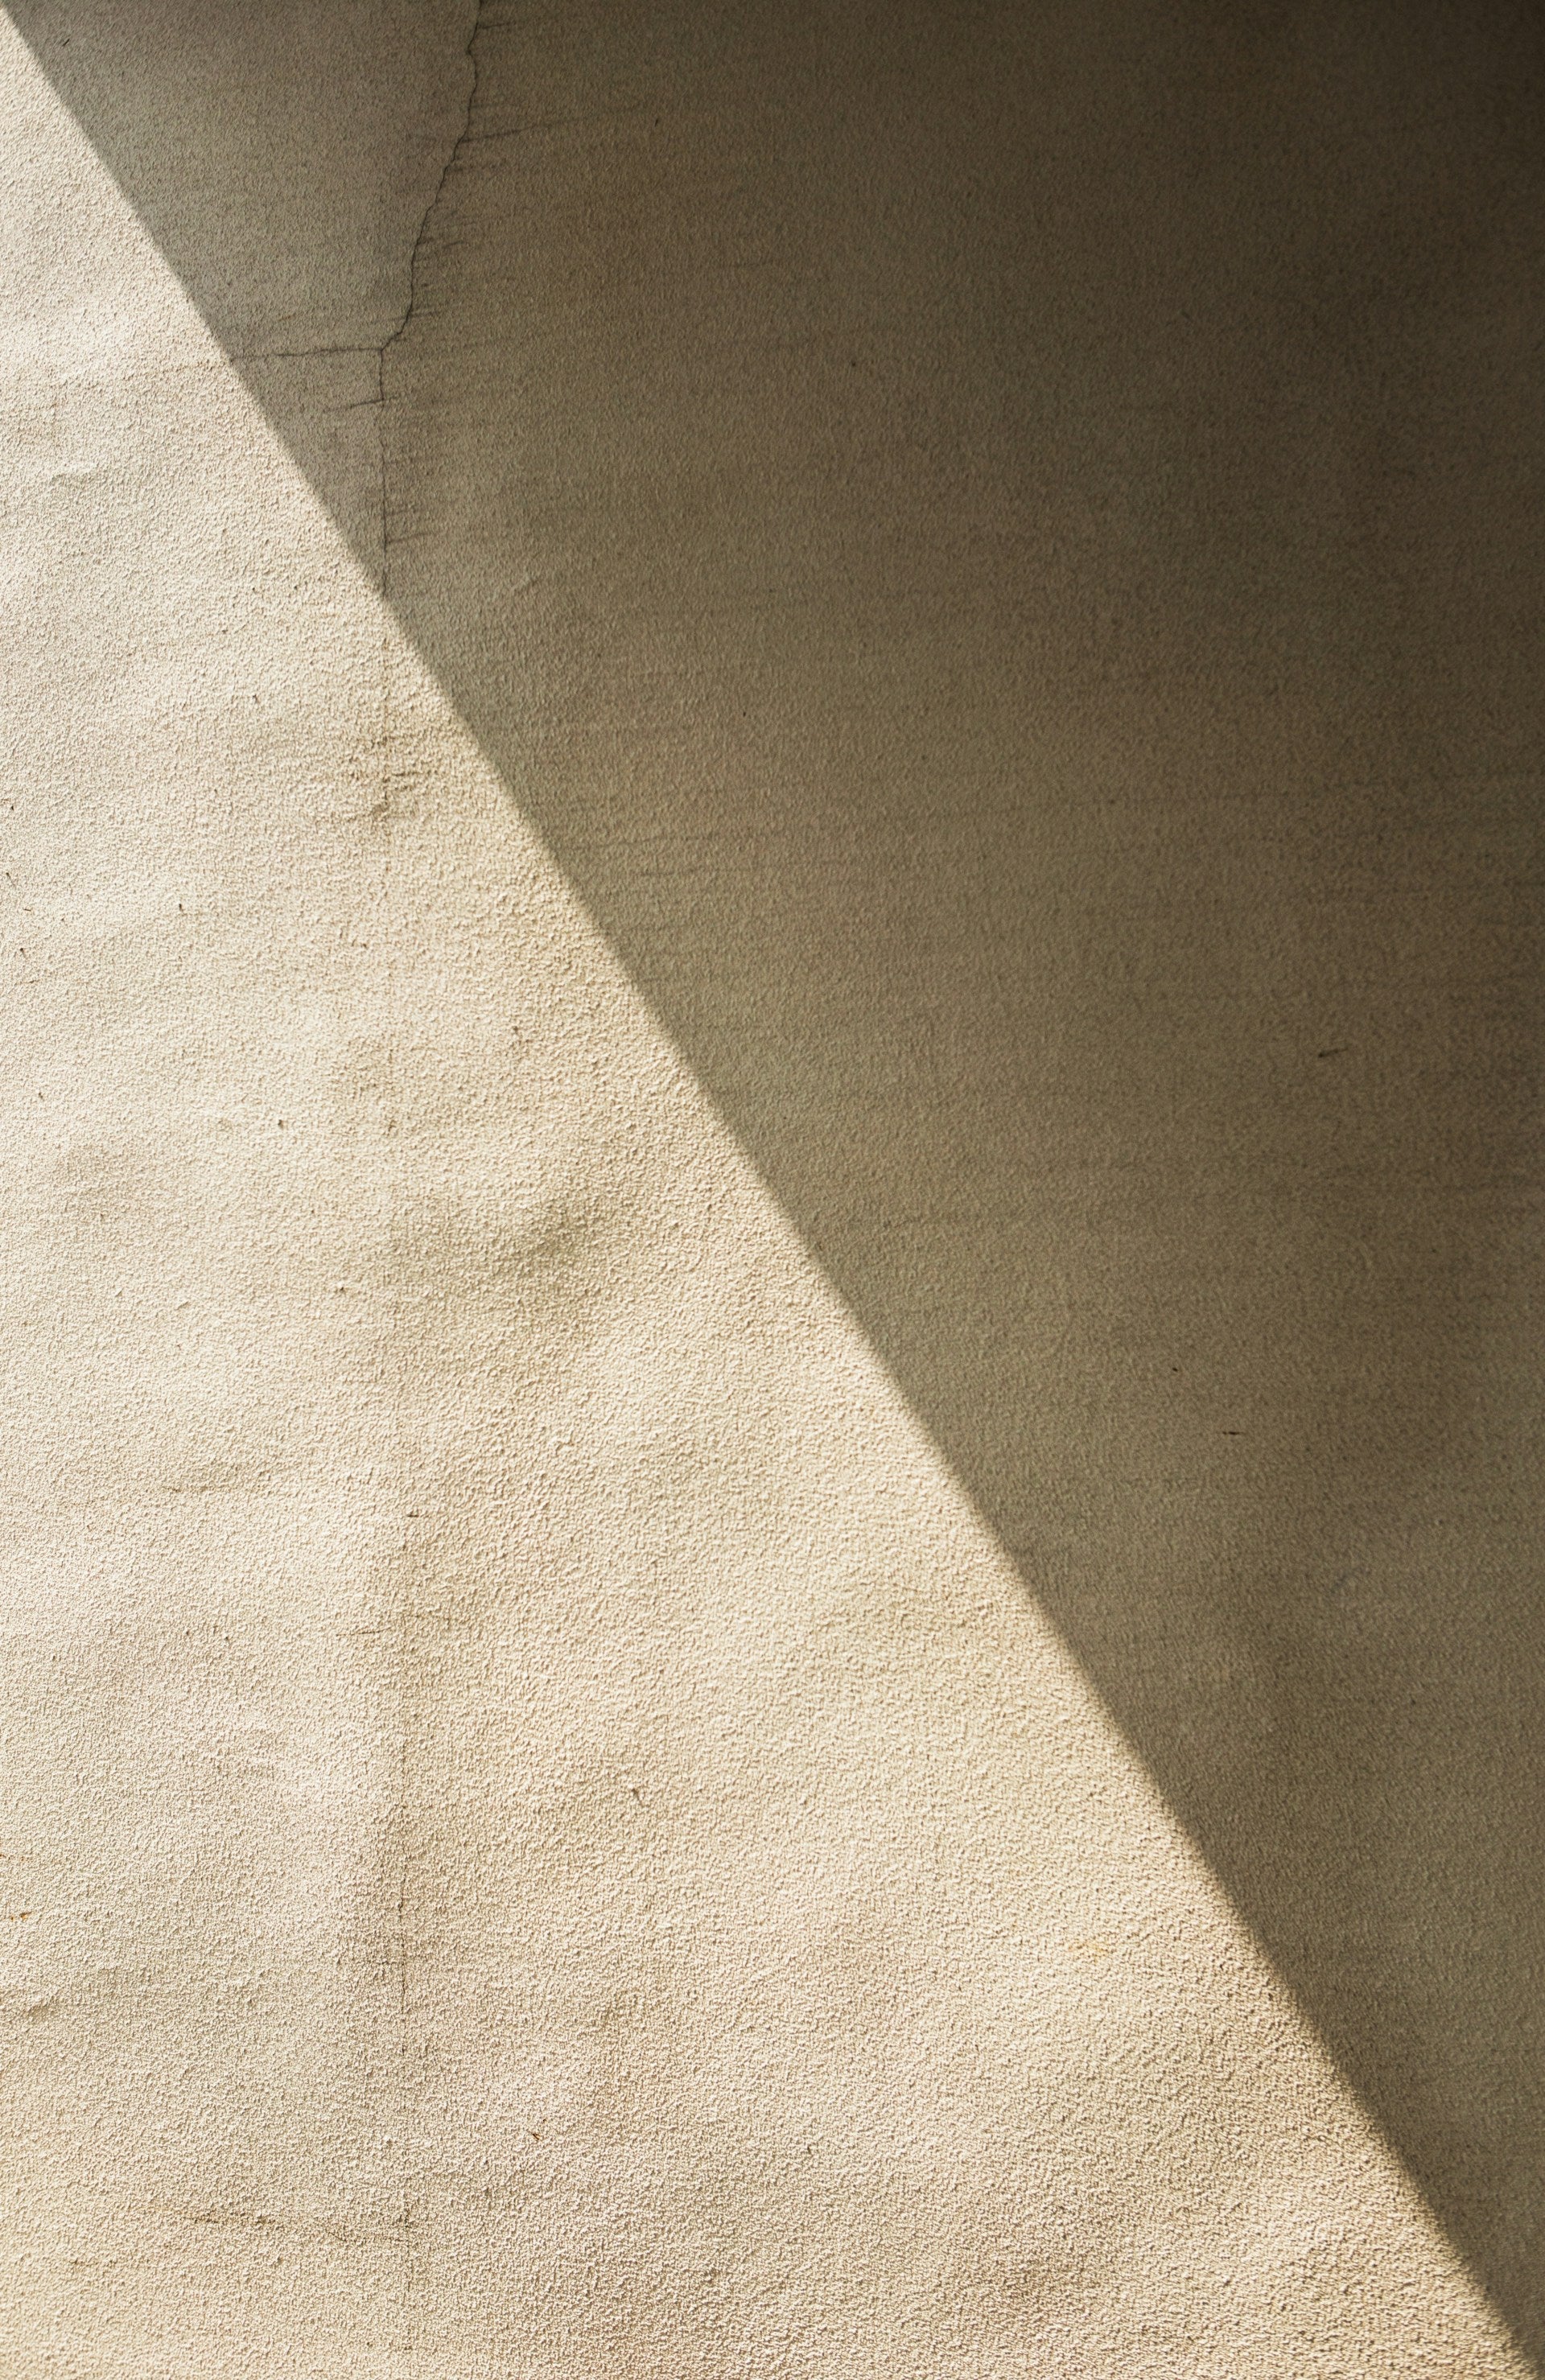 A diagonal shadow on a beige textured wall.